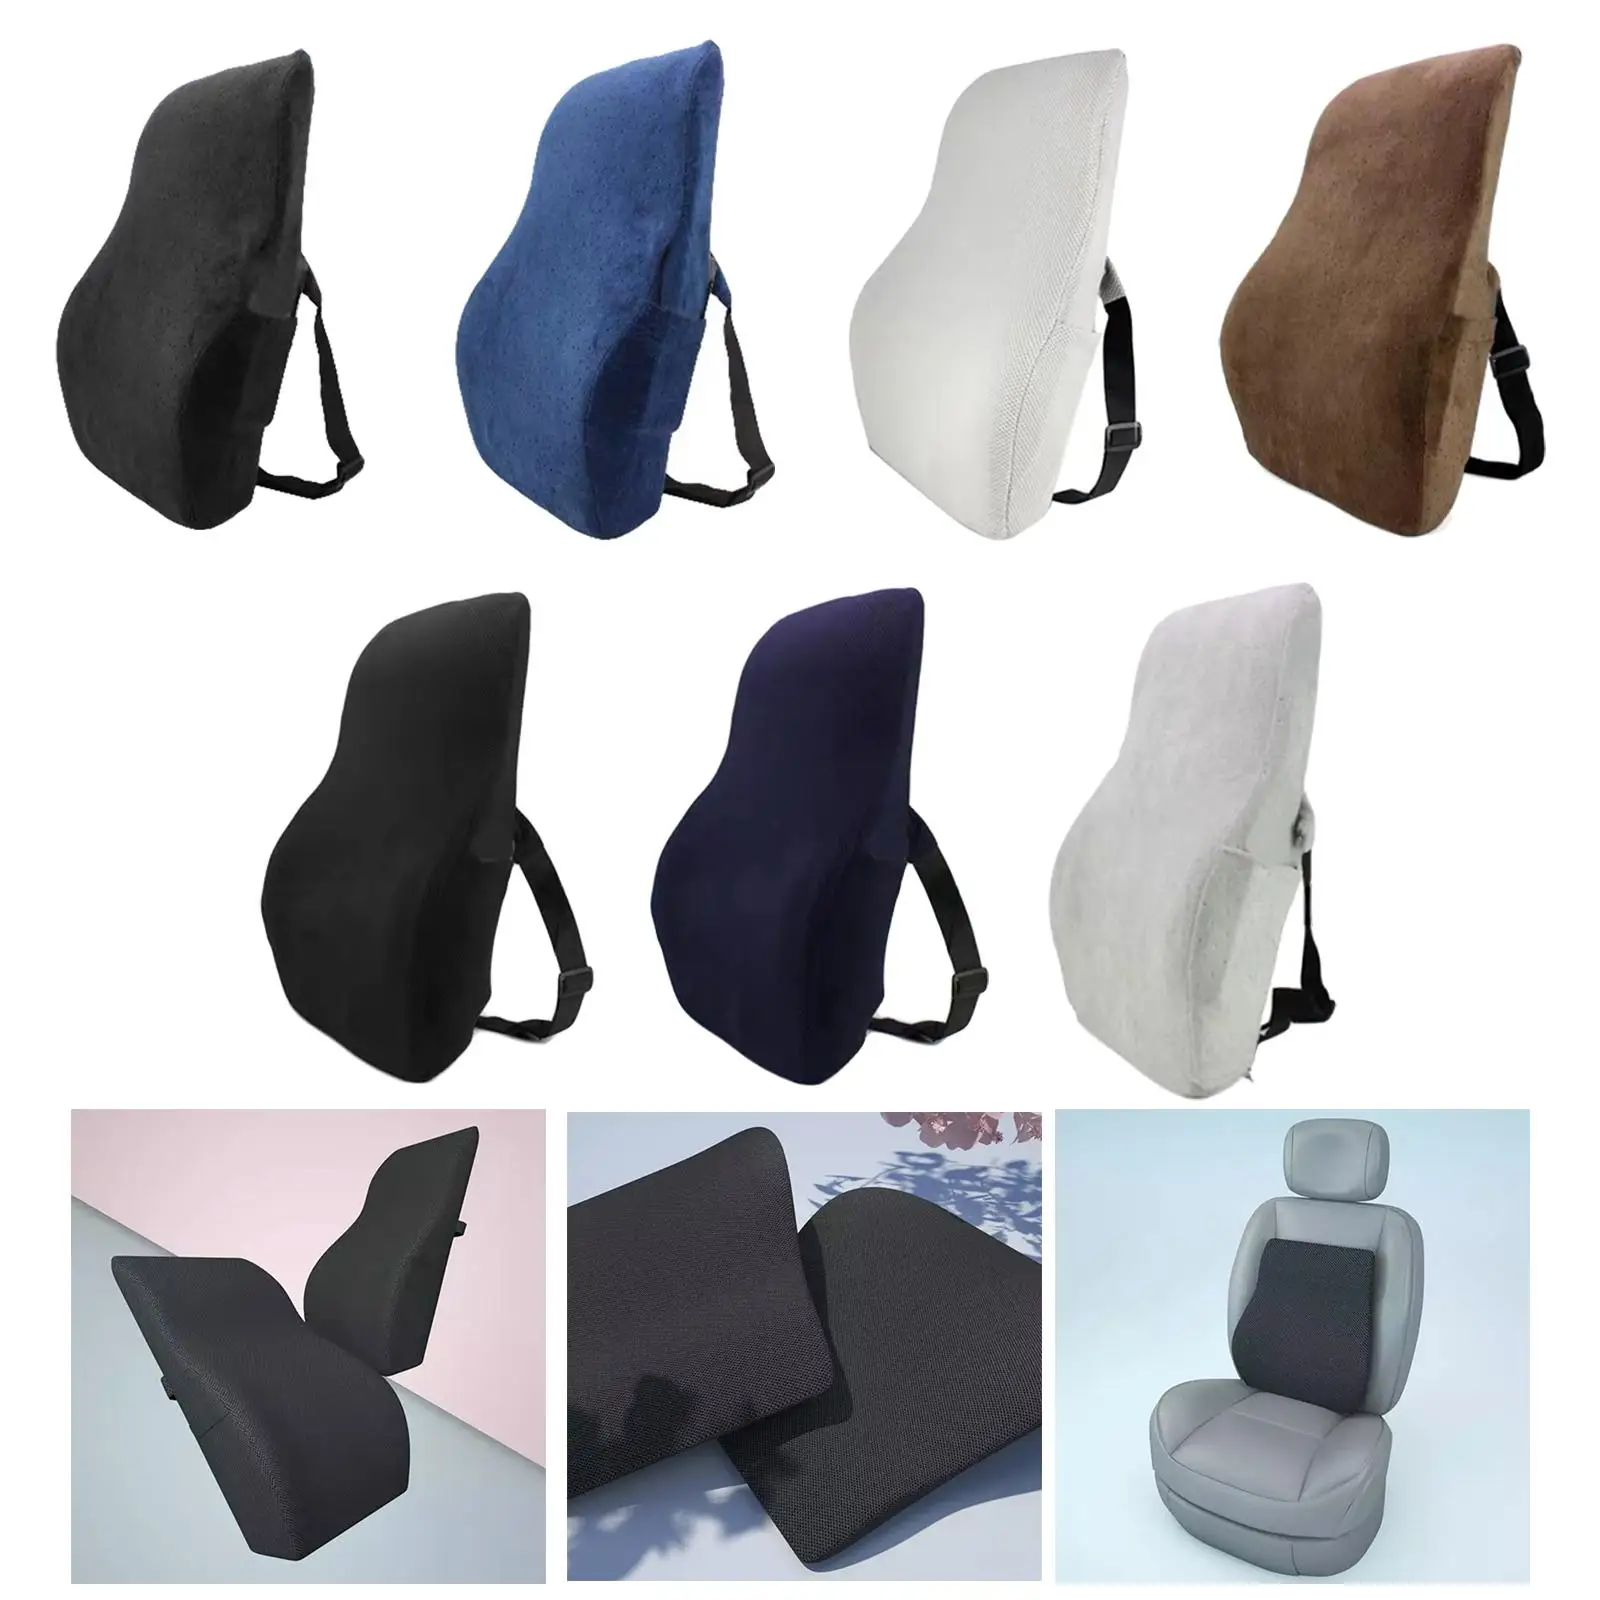 Auto Lumbar Back Pillow Memory Foam Detachable Relief Slow rebounds Correct Sitting Posture Cotton Back Cushion for Travel